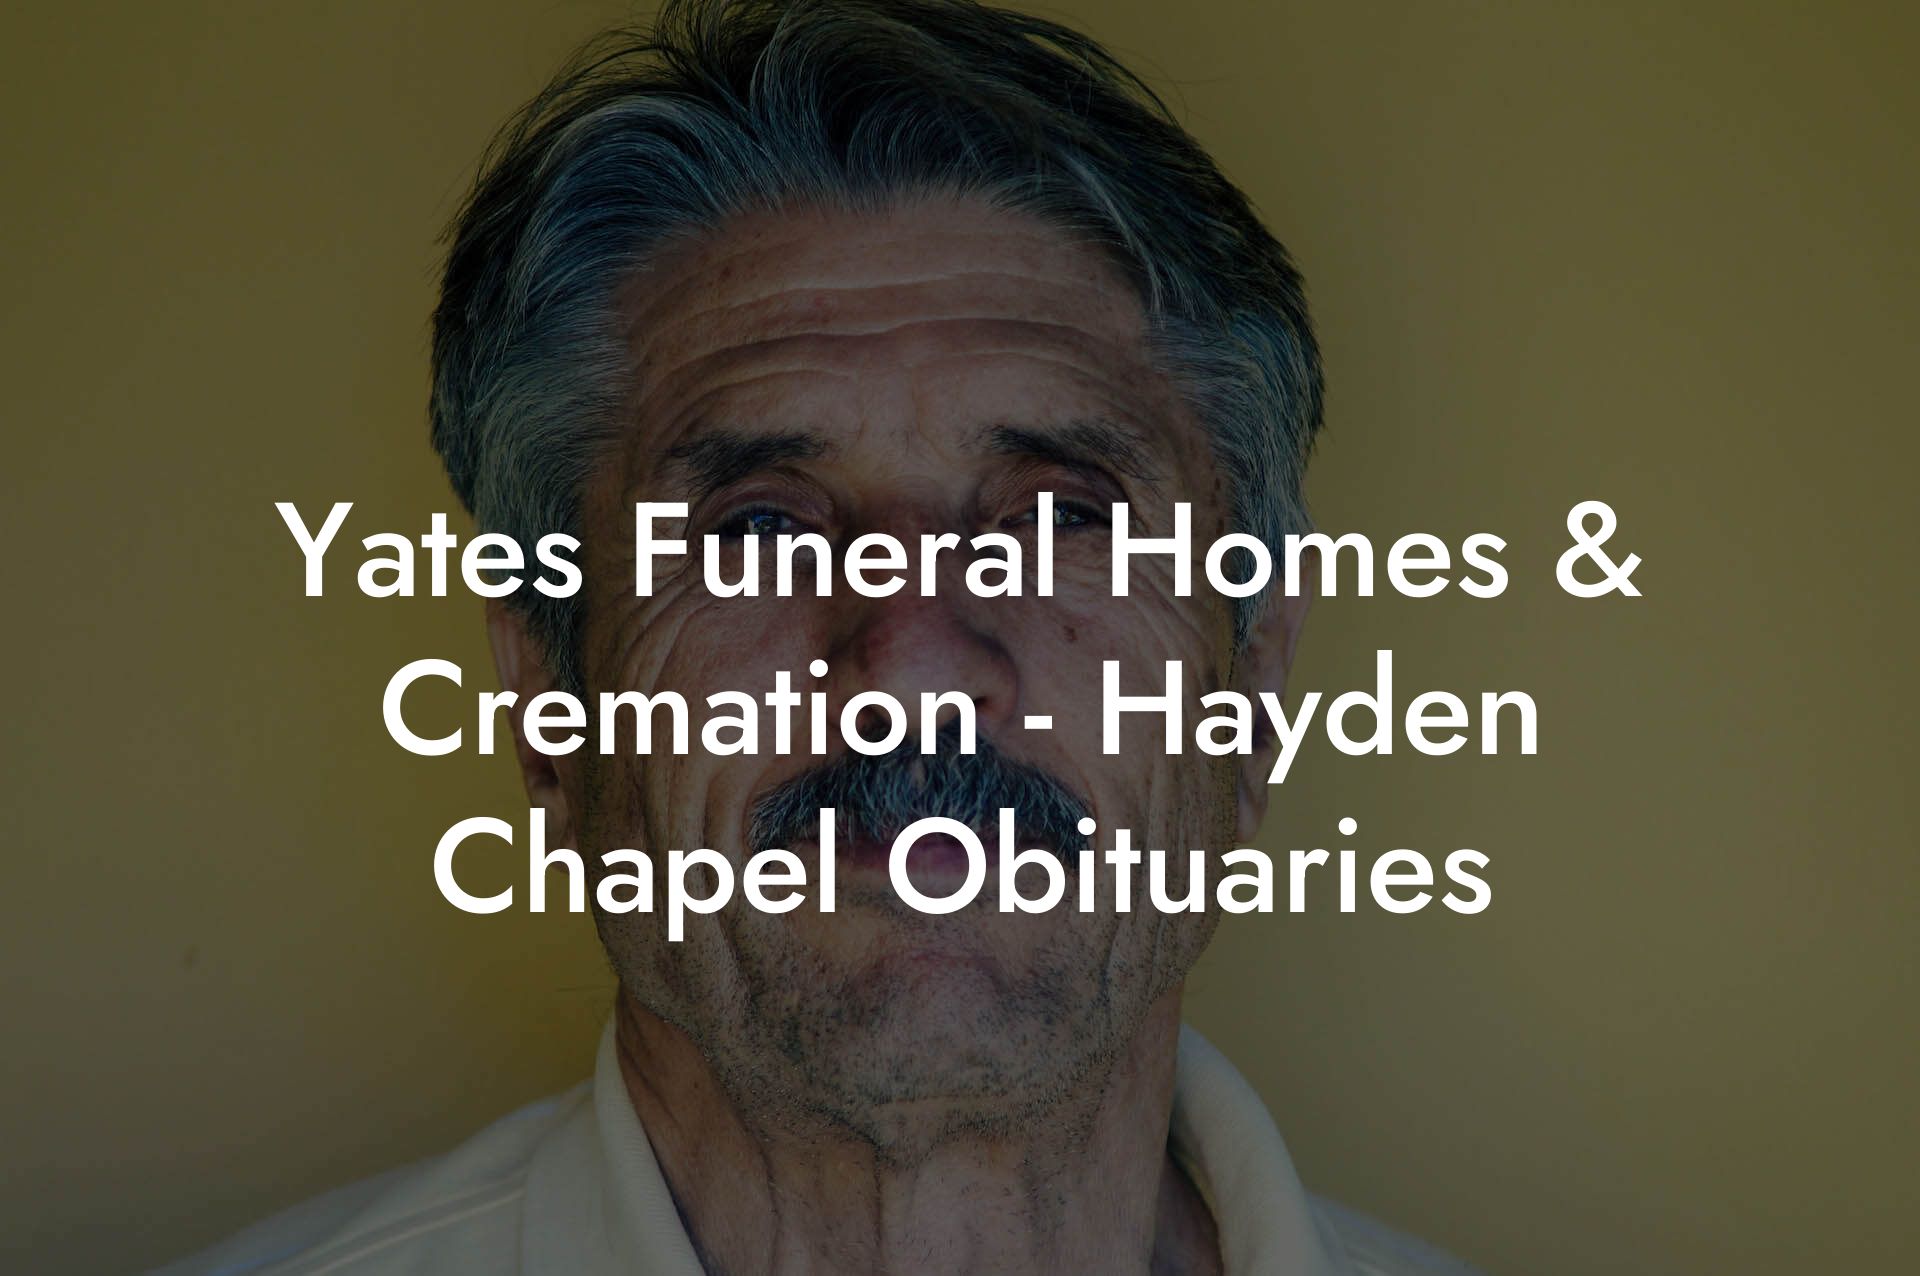 Yates Funeral Homes & Cremation - Hayden Chapel Obituaries